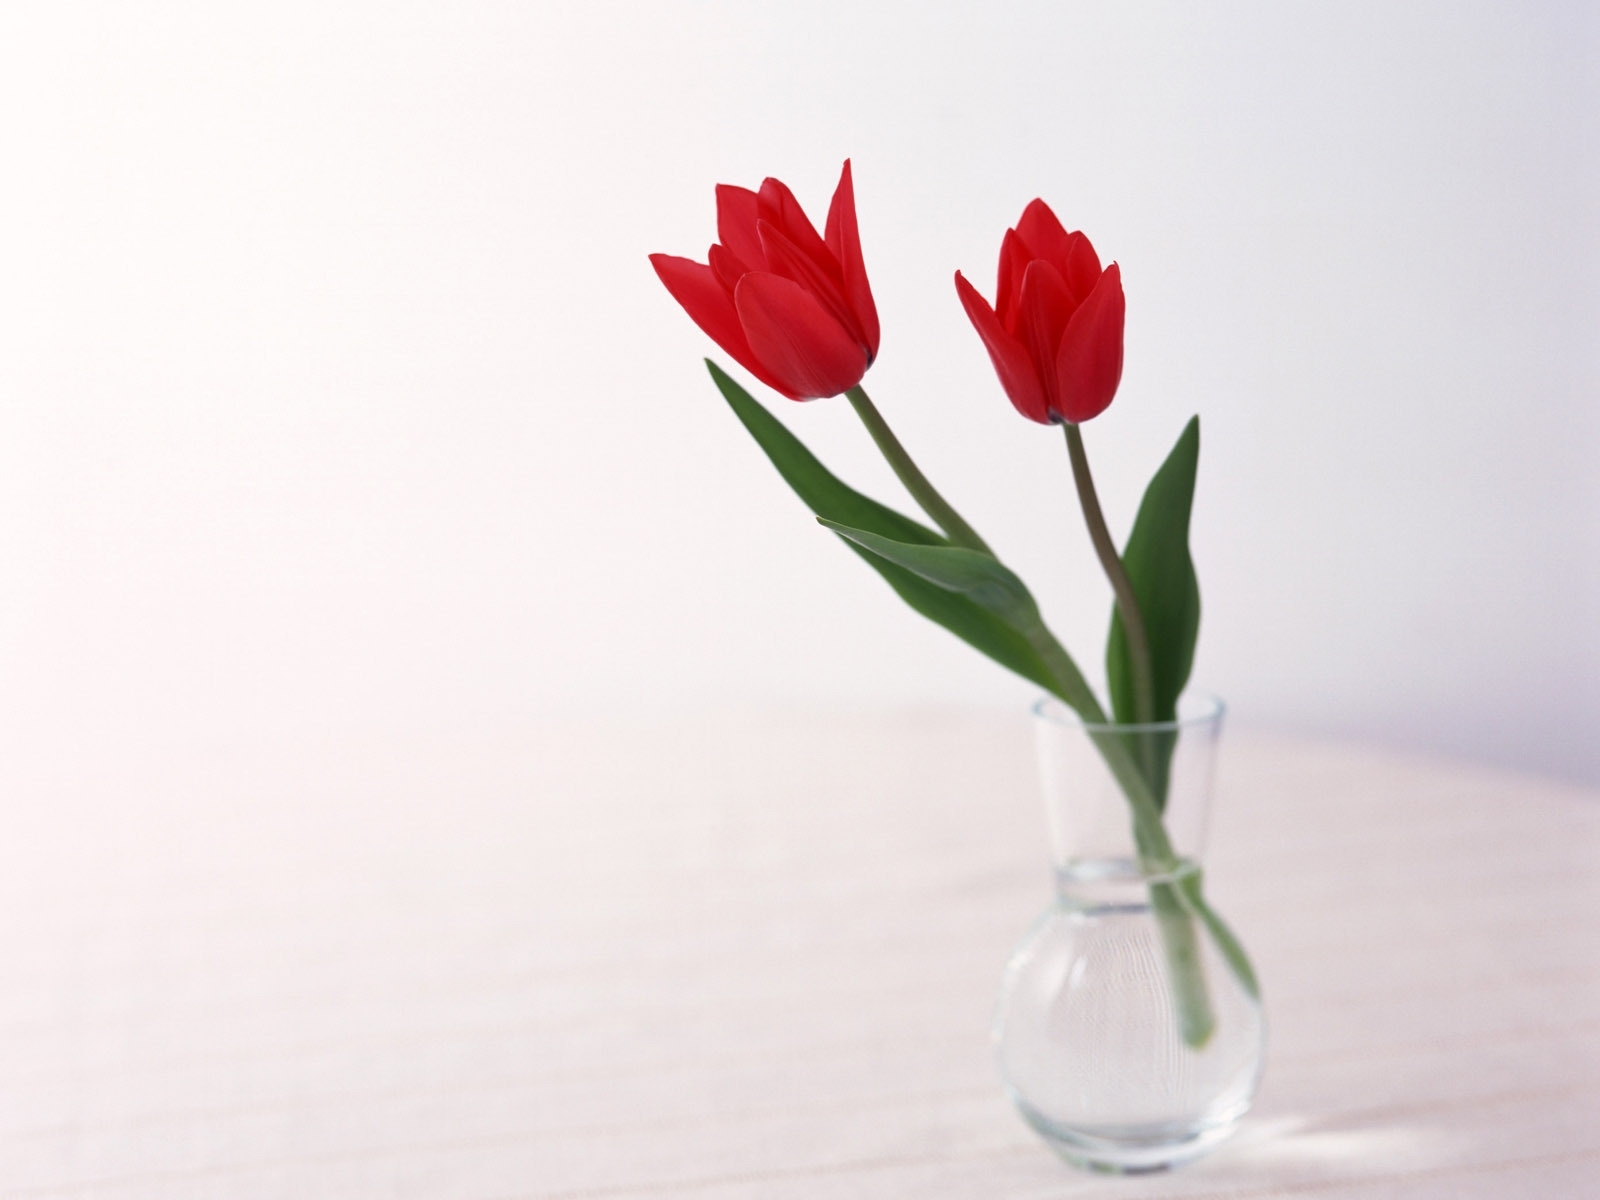 356 descarga Blanco fondos de pantalla para tu teléfono gratis, tulipanes, flores, plantas Blanco imágenes y protectores de pantalla para tu teléfono